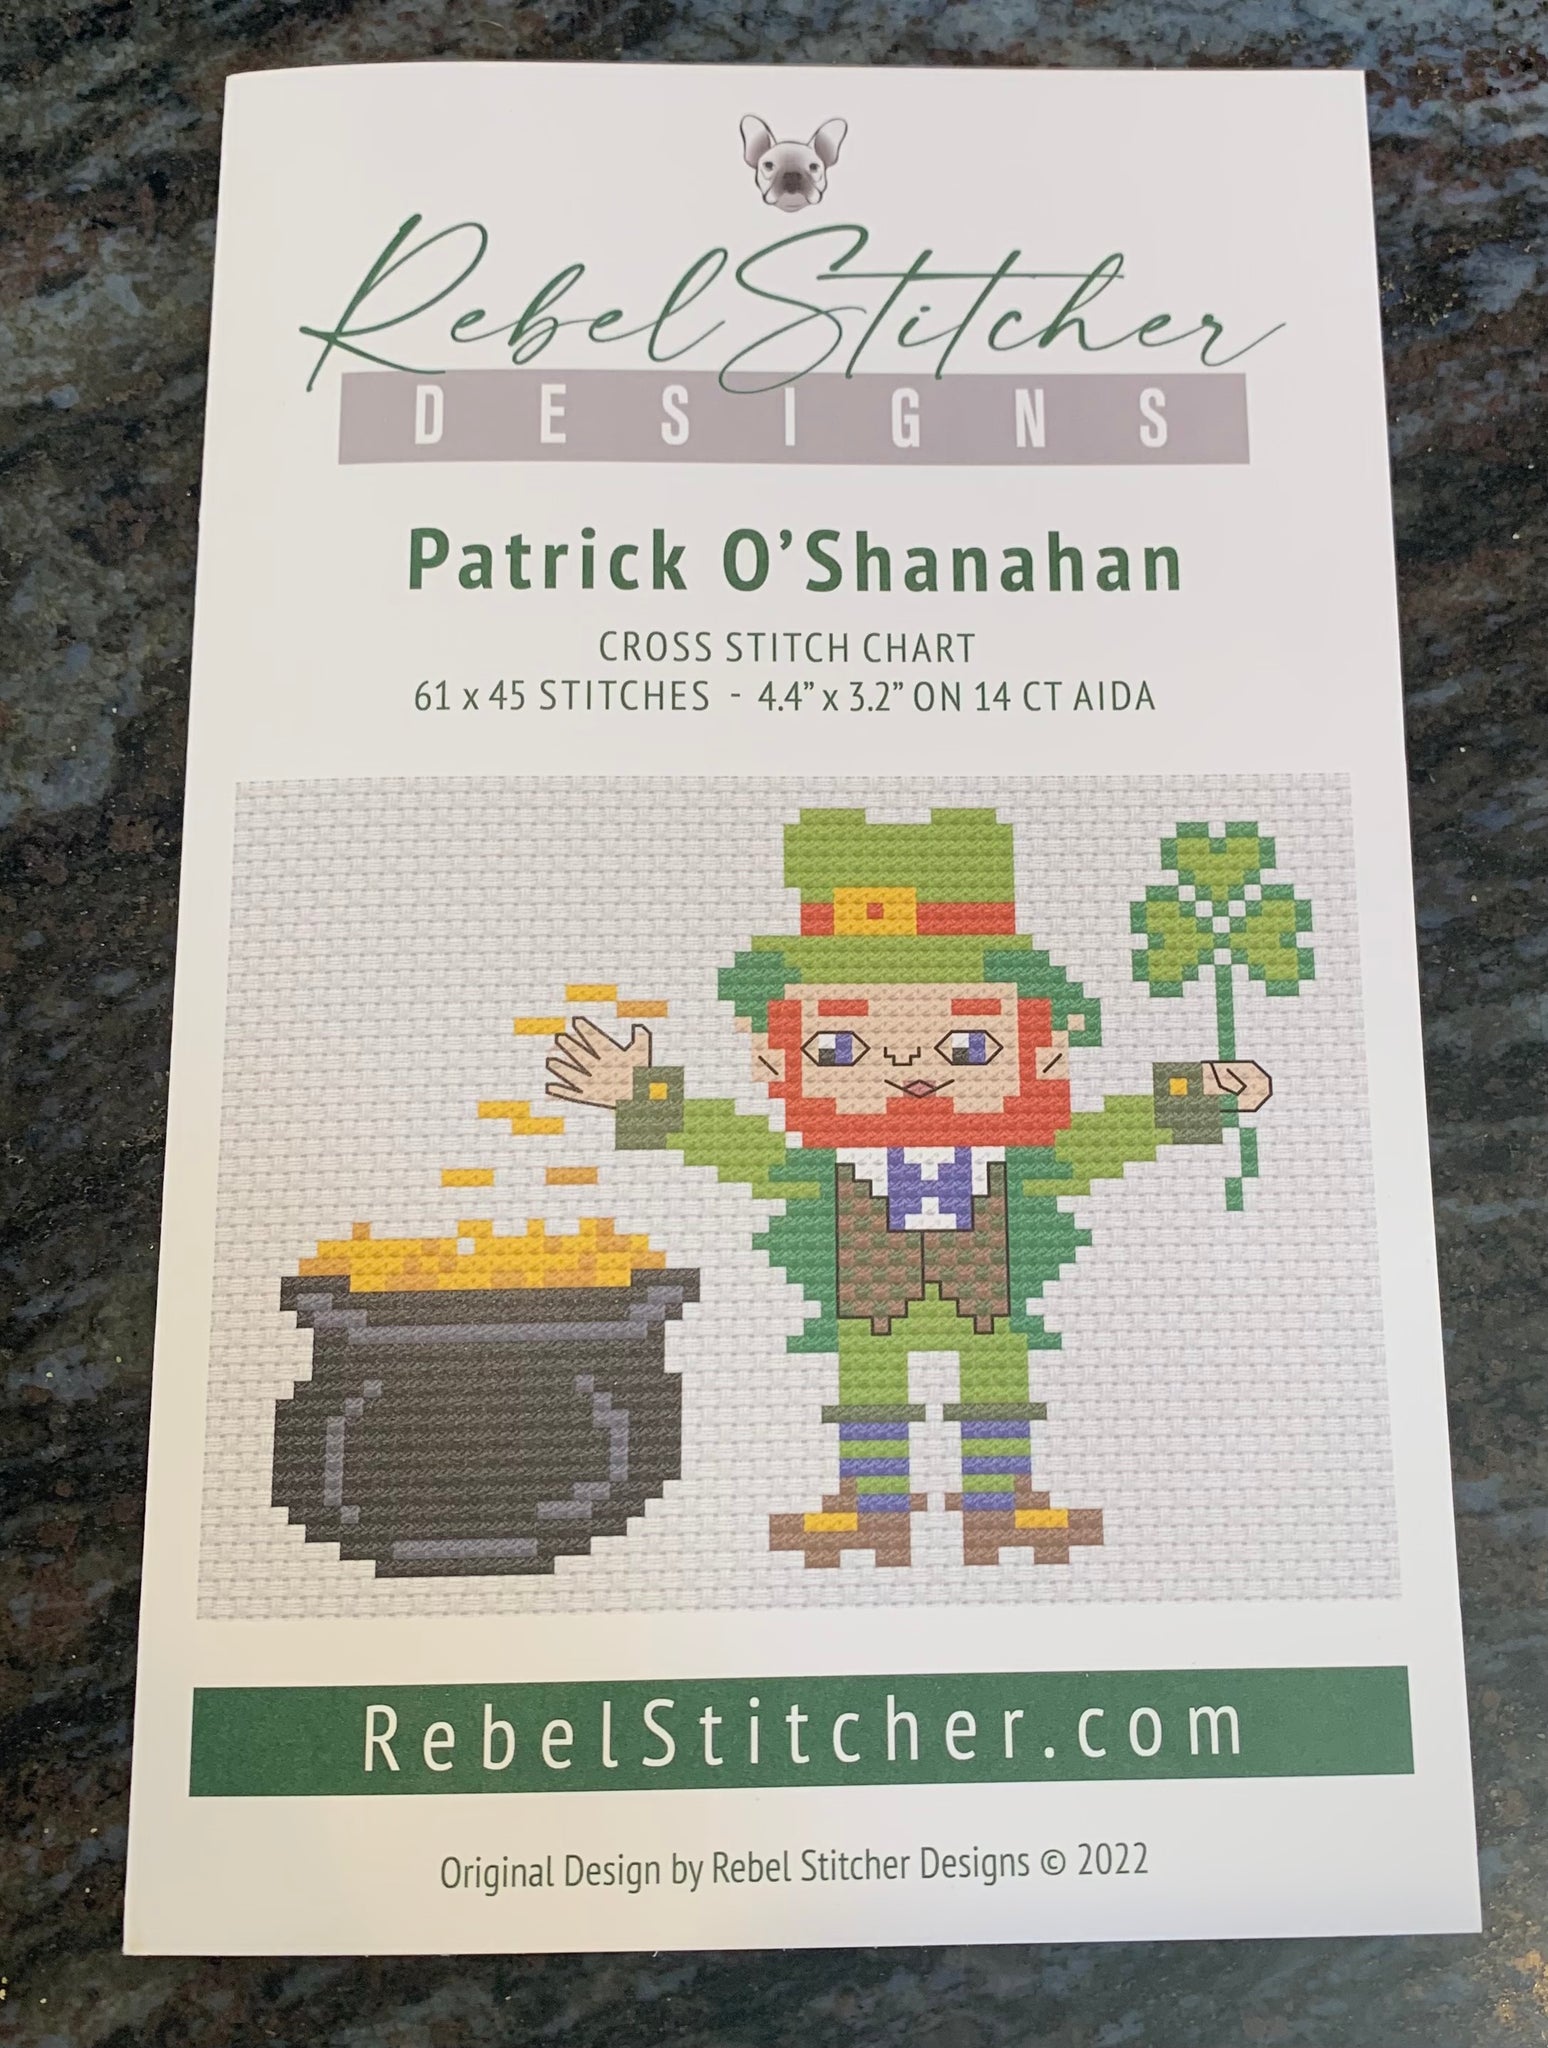 Patrick O’Shanahan by Rebel Stitcher Designs